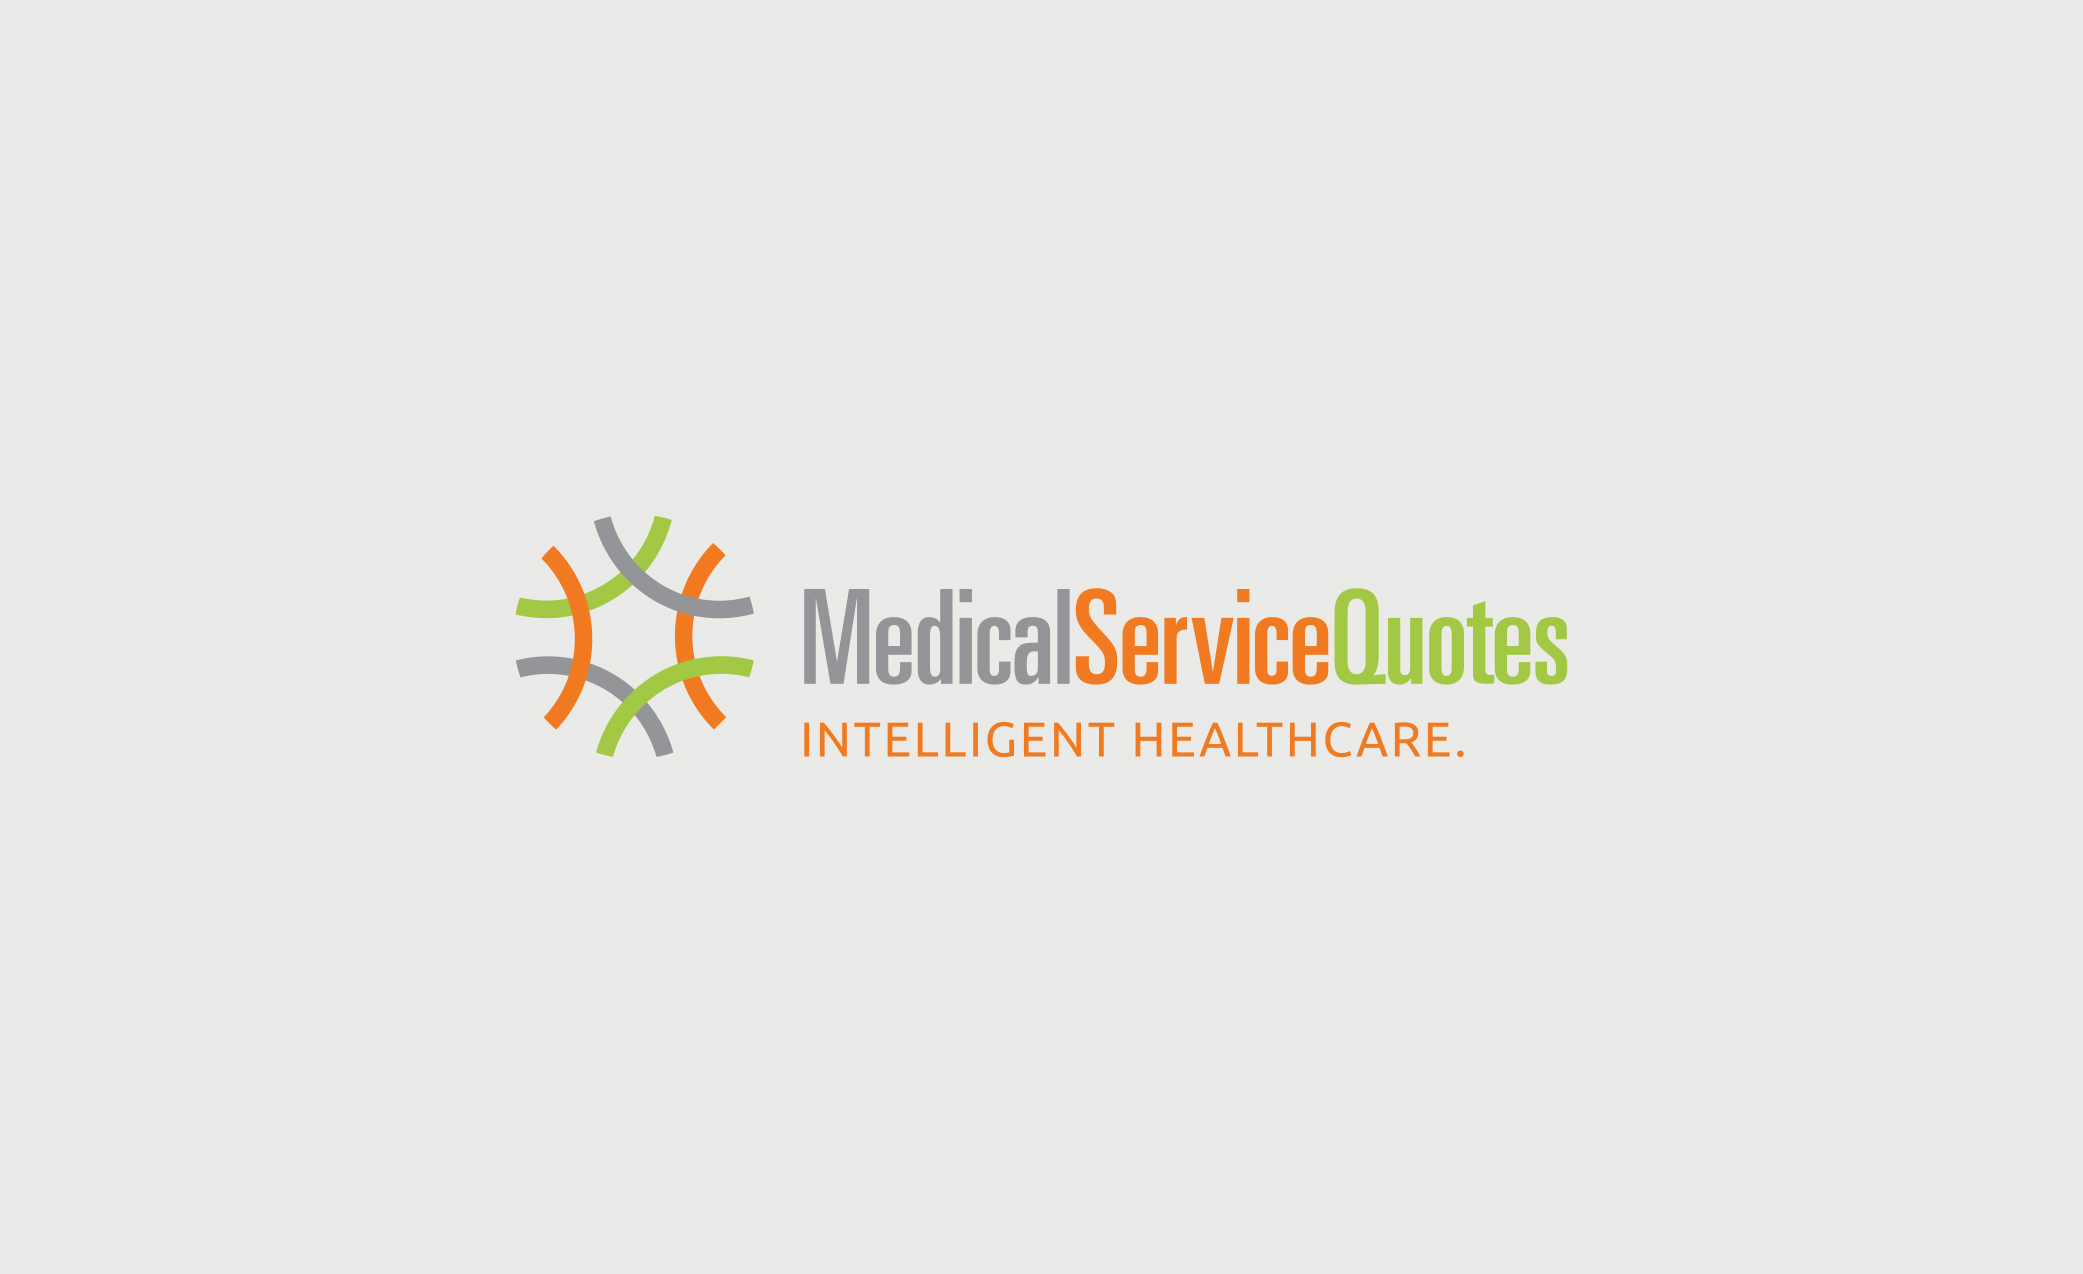 Medical Service Quotes healthcare brand identity design